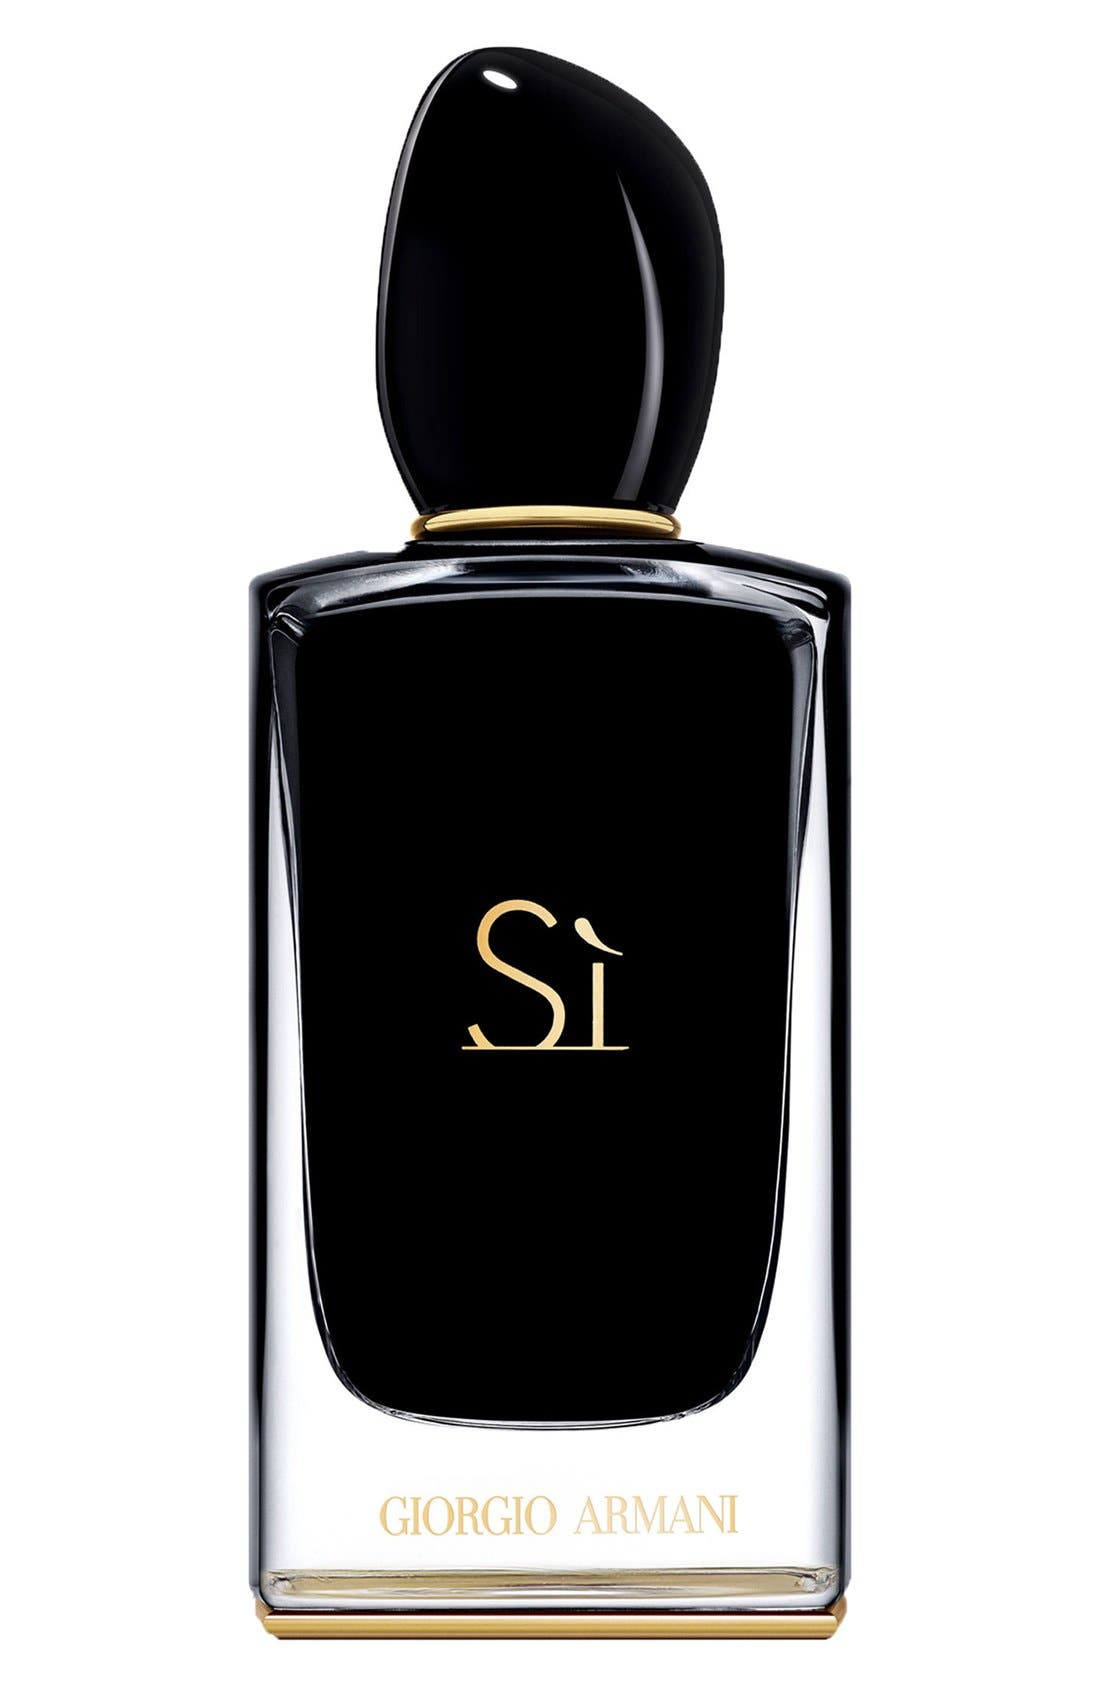 EAN 3605522035300 product image for Giorgio Armani Si Intense Eau De Parfum | upcitemdb.com